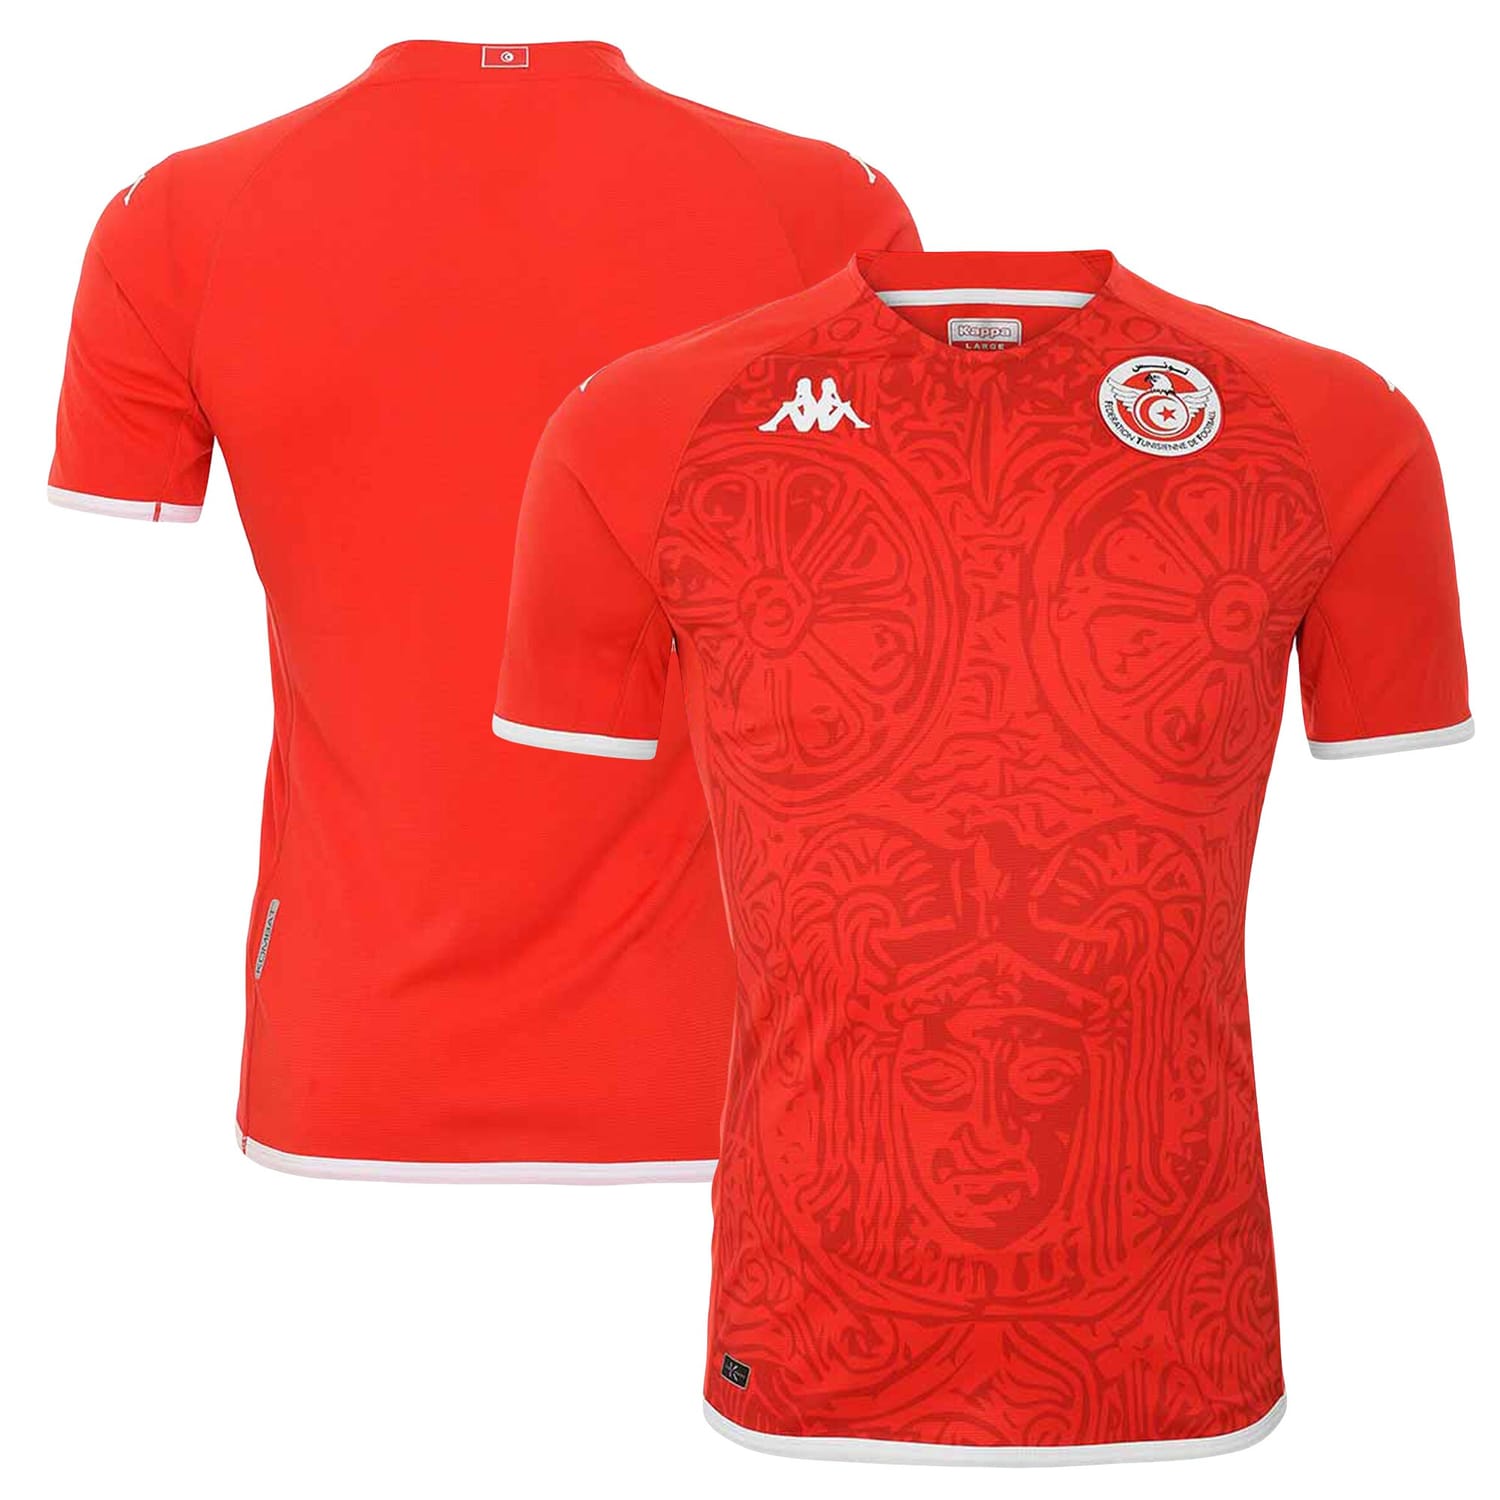 Tunisia National Team Home Jersey Shirt for Men